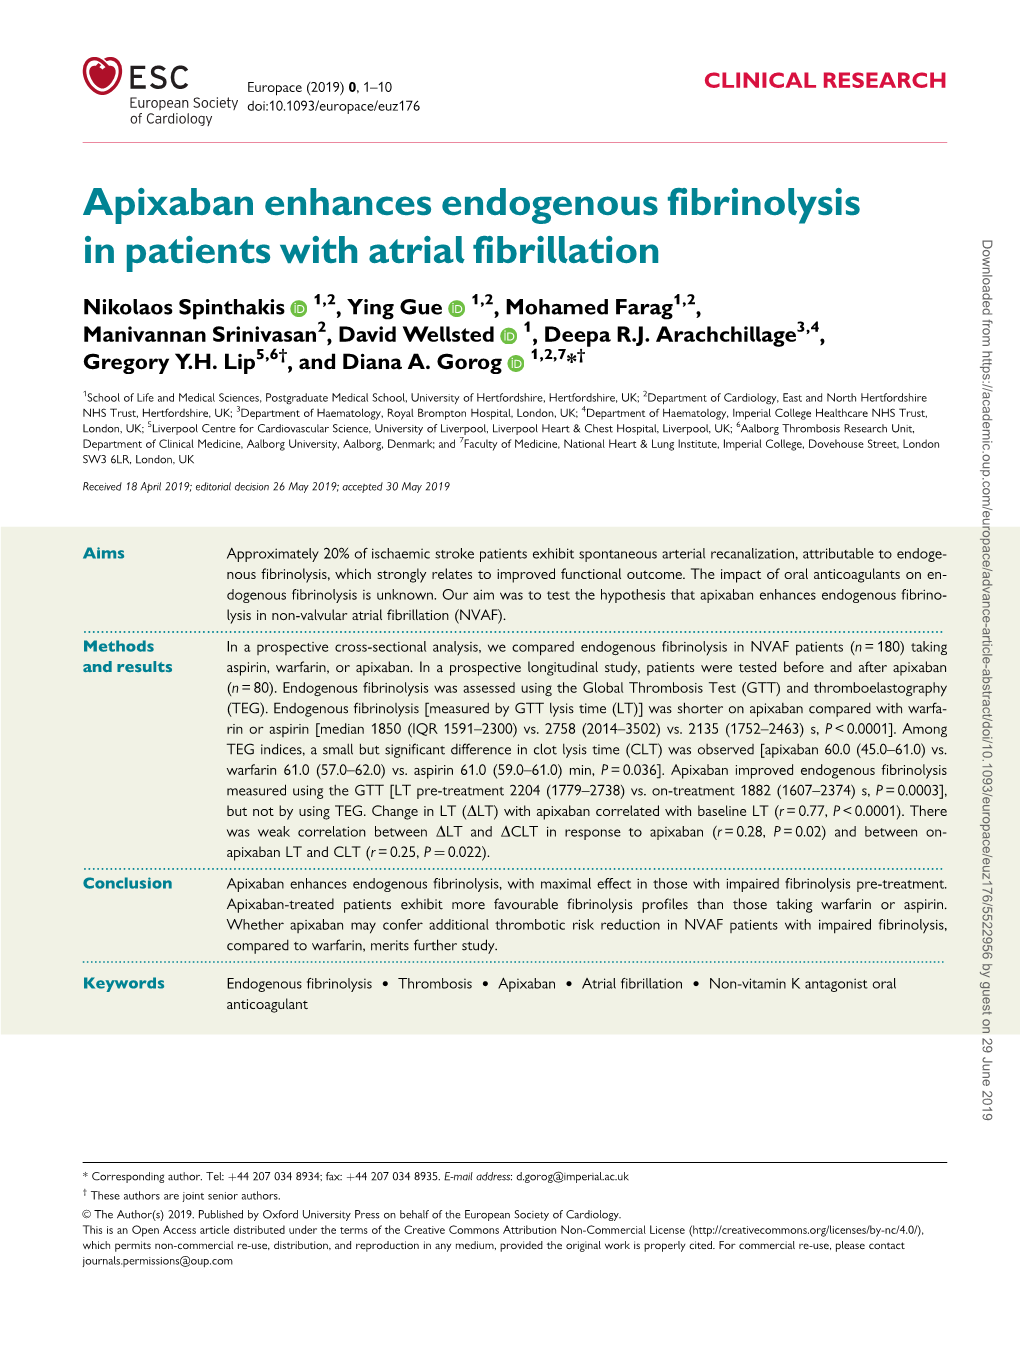 Apixaban Enhances Endogenous Fibrinolysis in Patients with Atrial